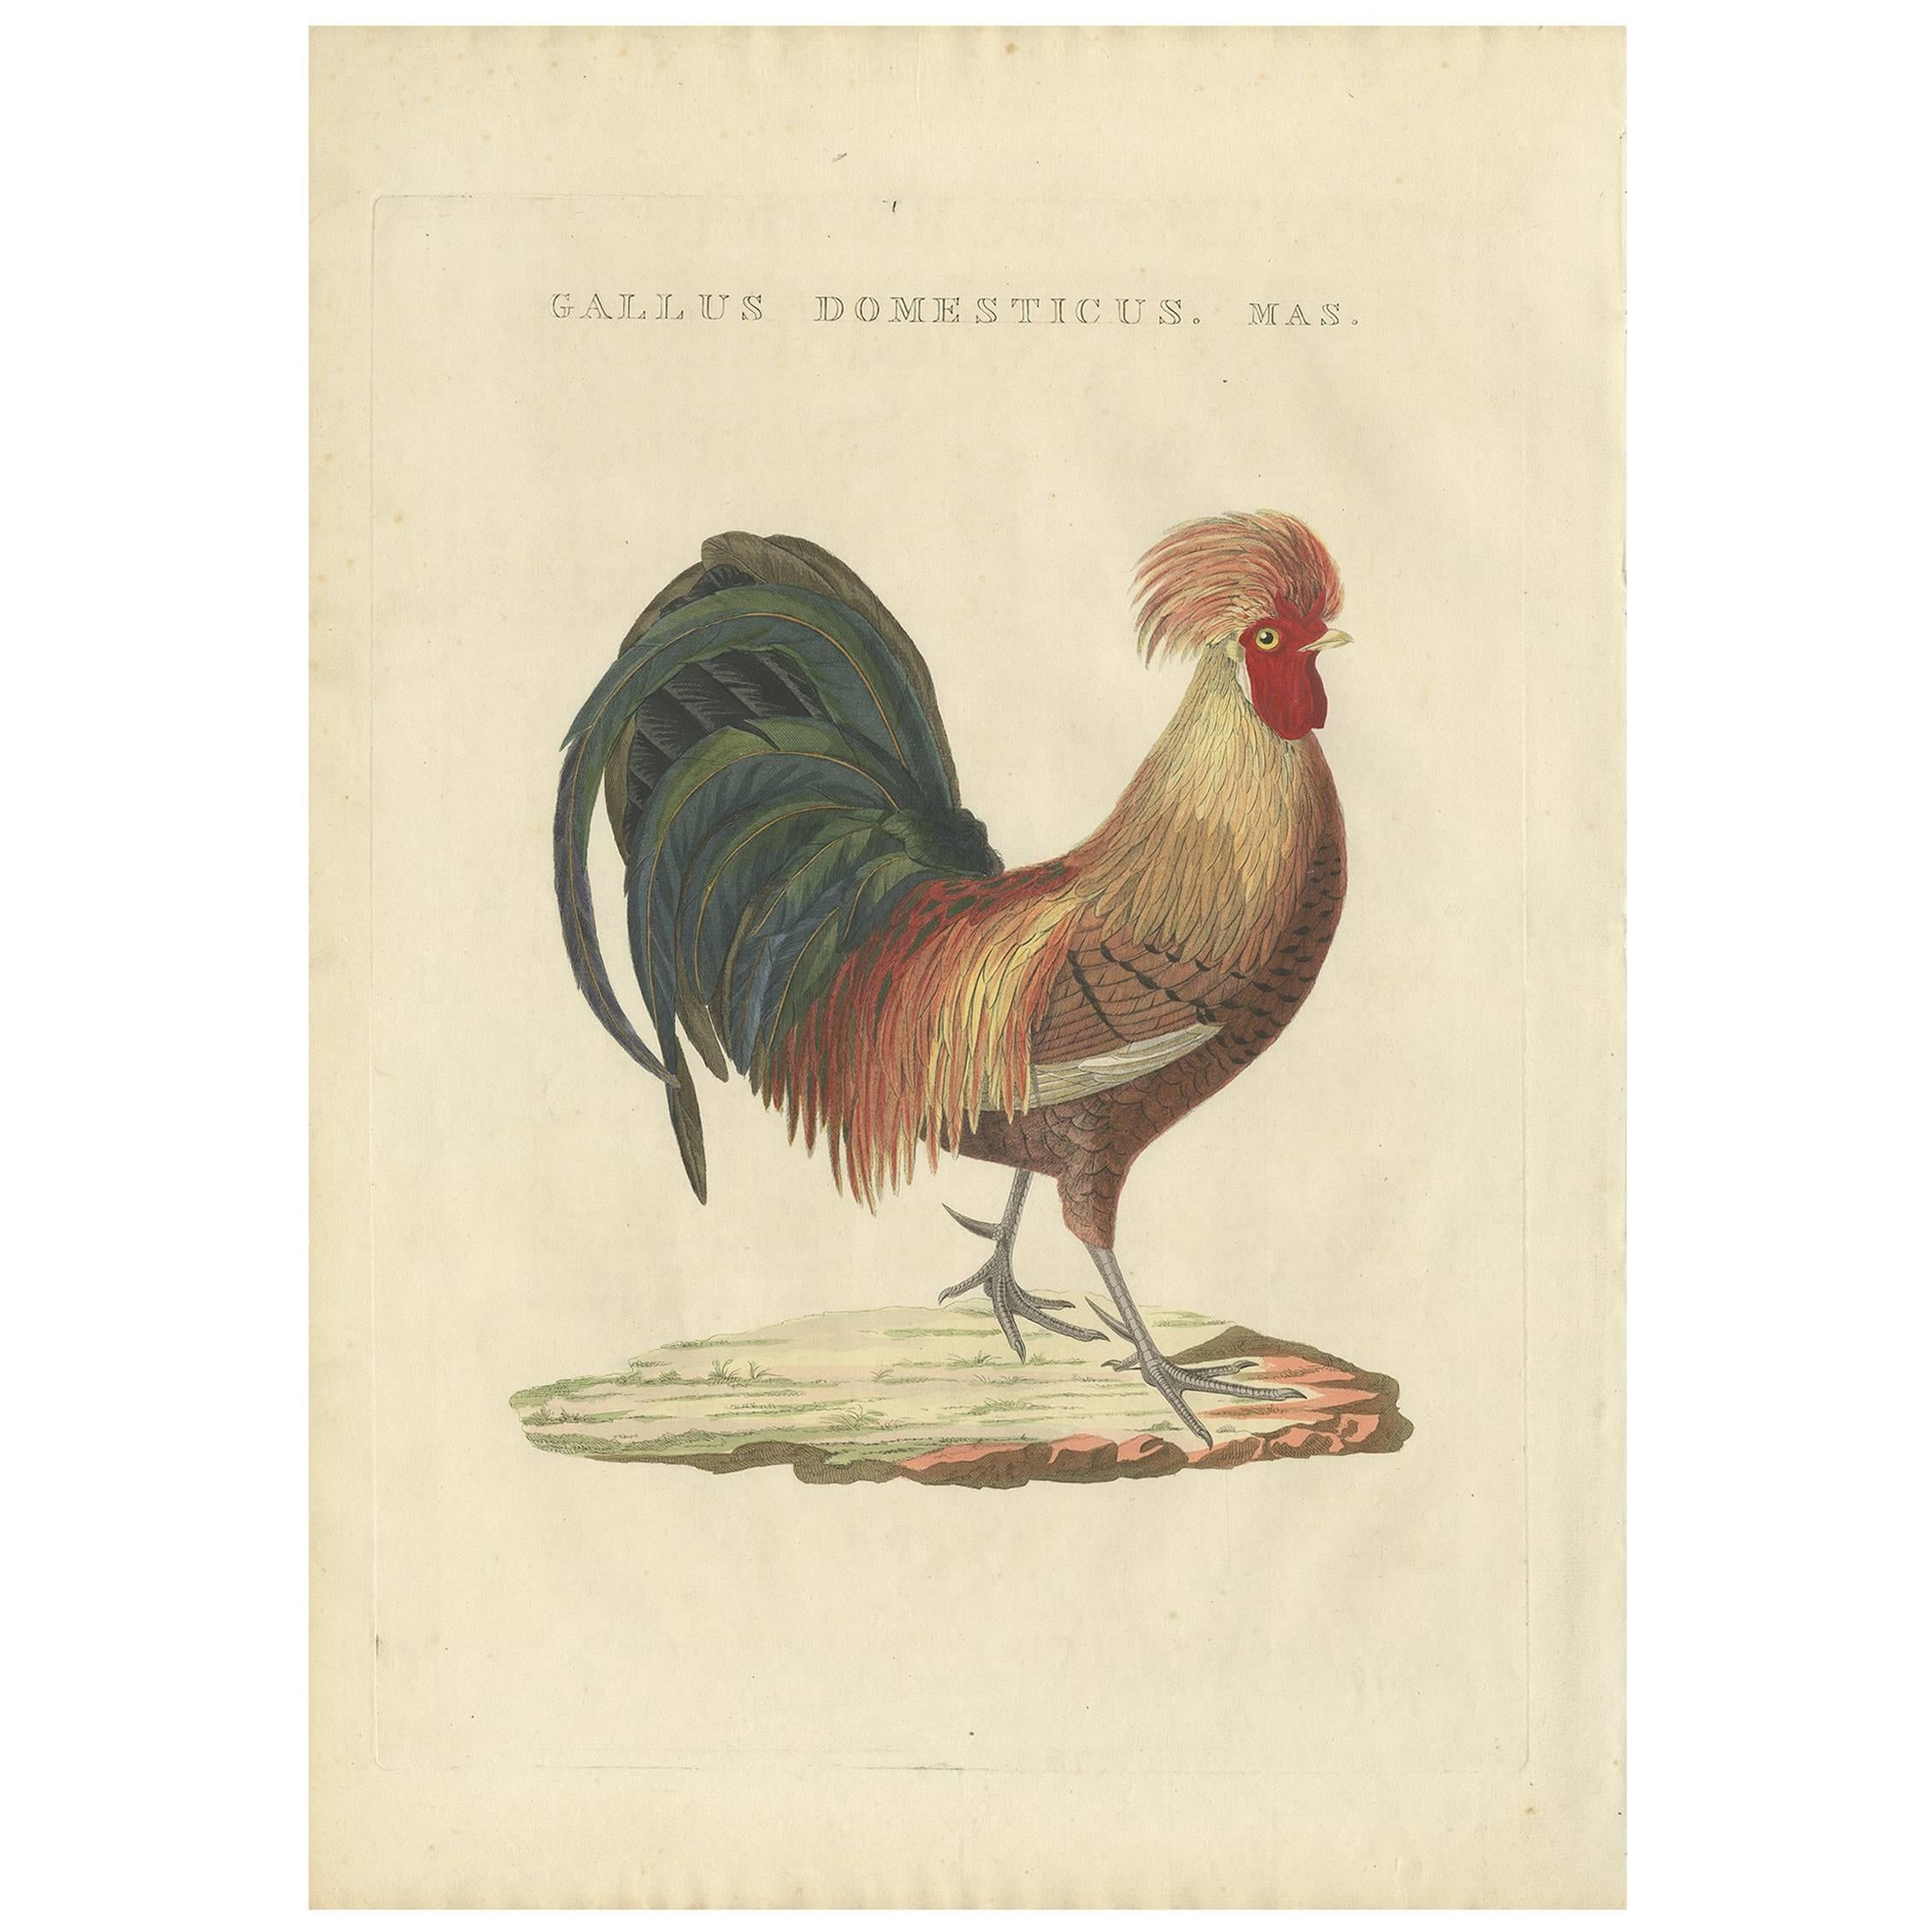 Antique Bird Print of a Rooster by Sepp & Nozeman, 1829